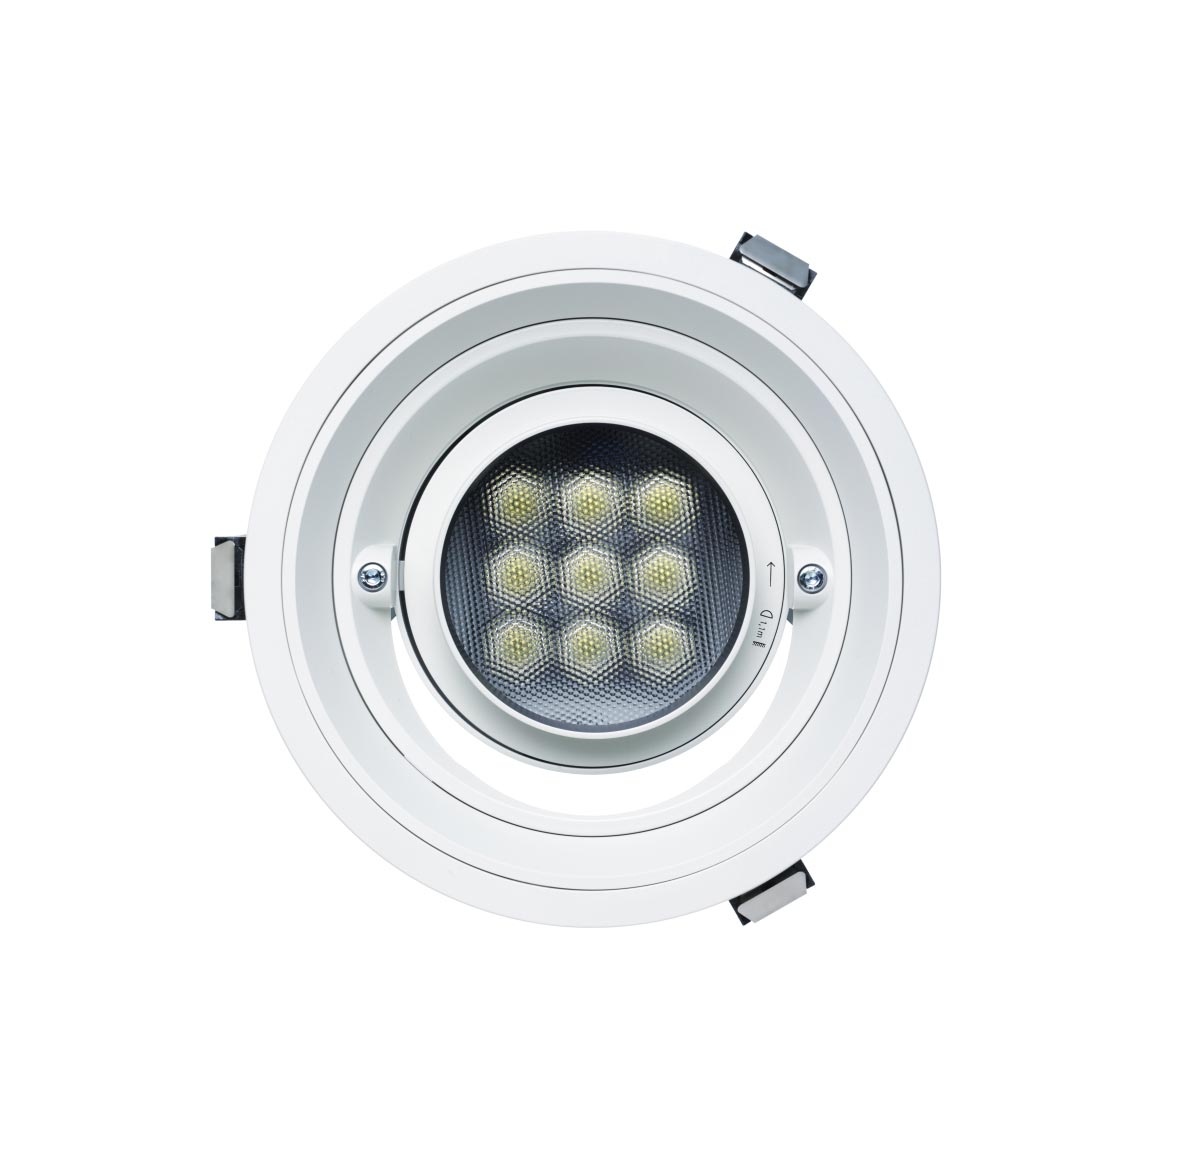 Quintessence Round Recessed Adjustable Spotlight With Regressed Mounting Tray Narrow Spot 8W LED 3000K DALI White Trim F/P